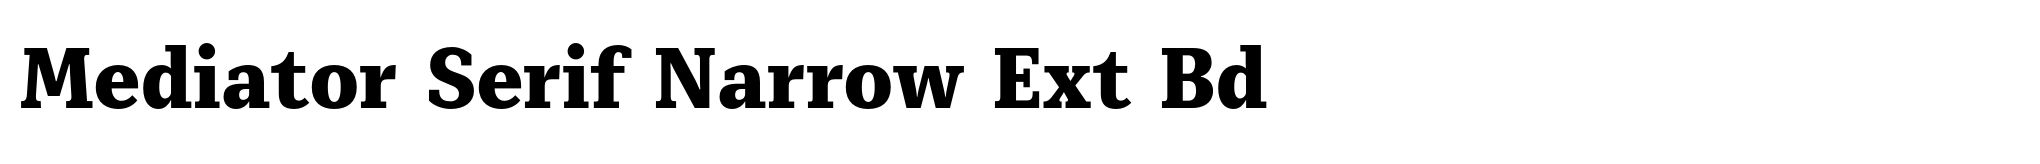 Mediator Serif Narrow Ext Bd image